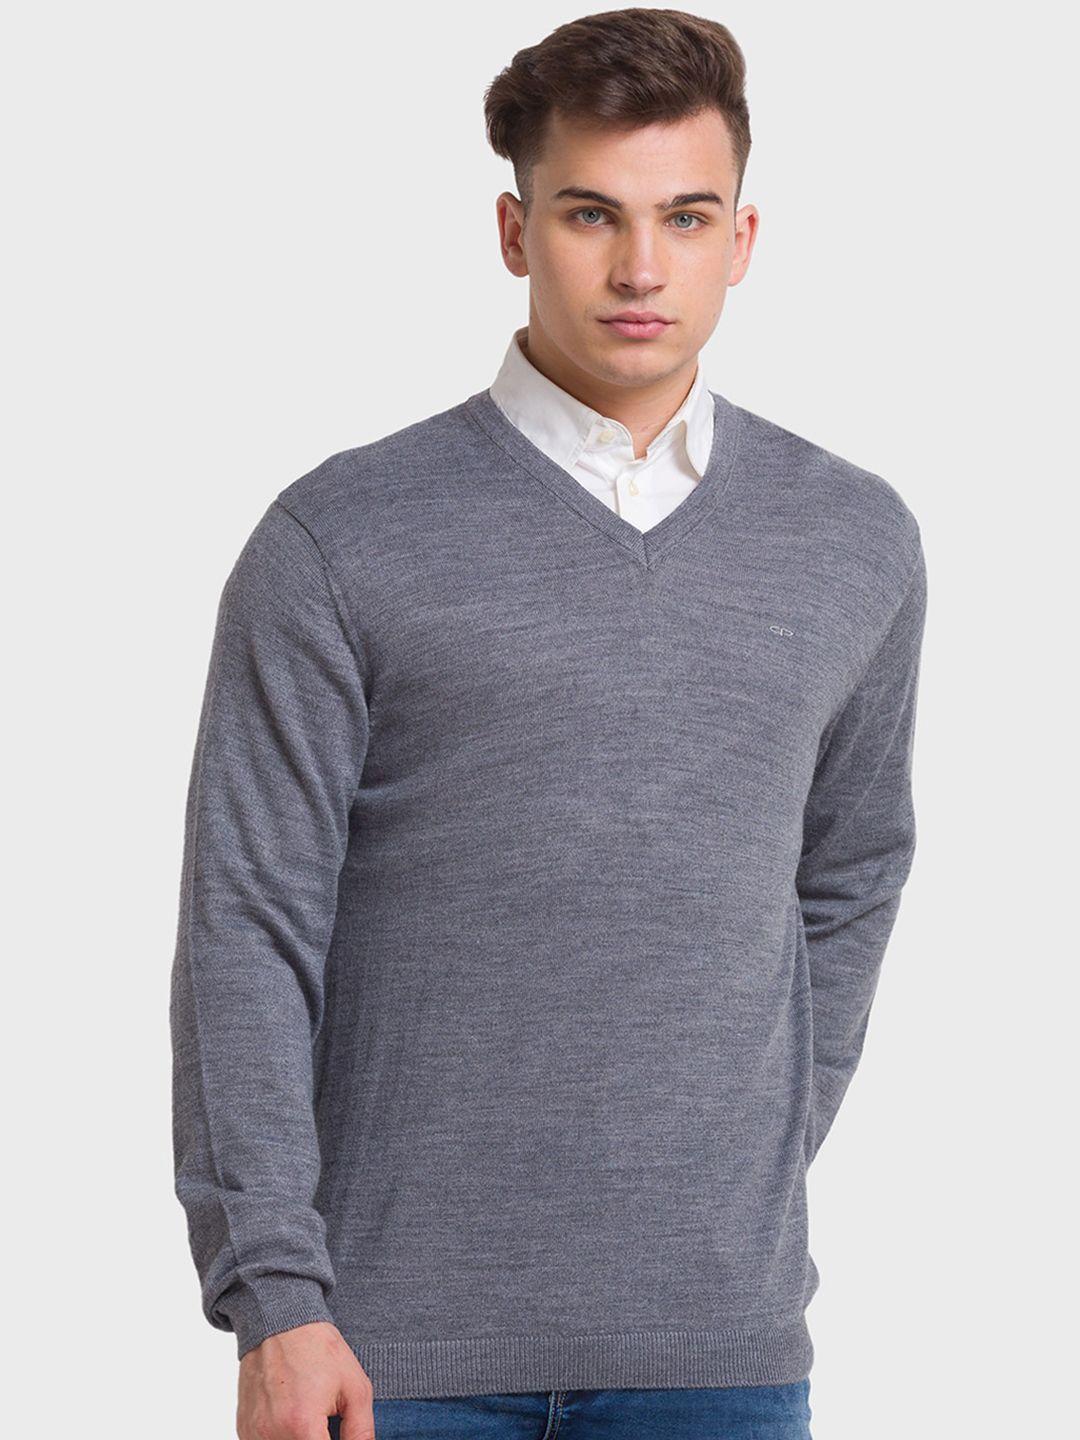 colorplus-men-v-neck-pullover-sweater